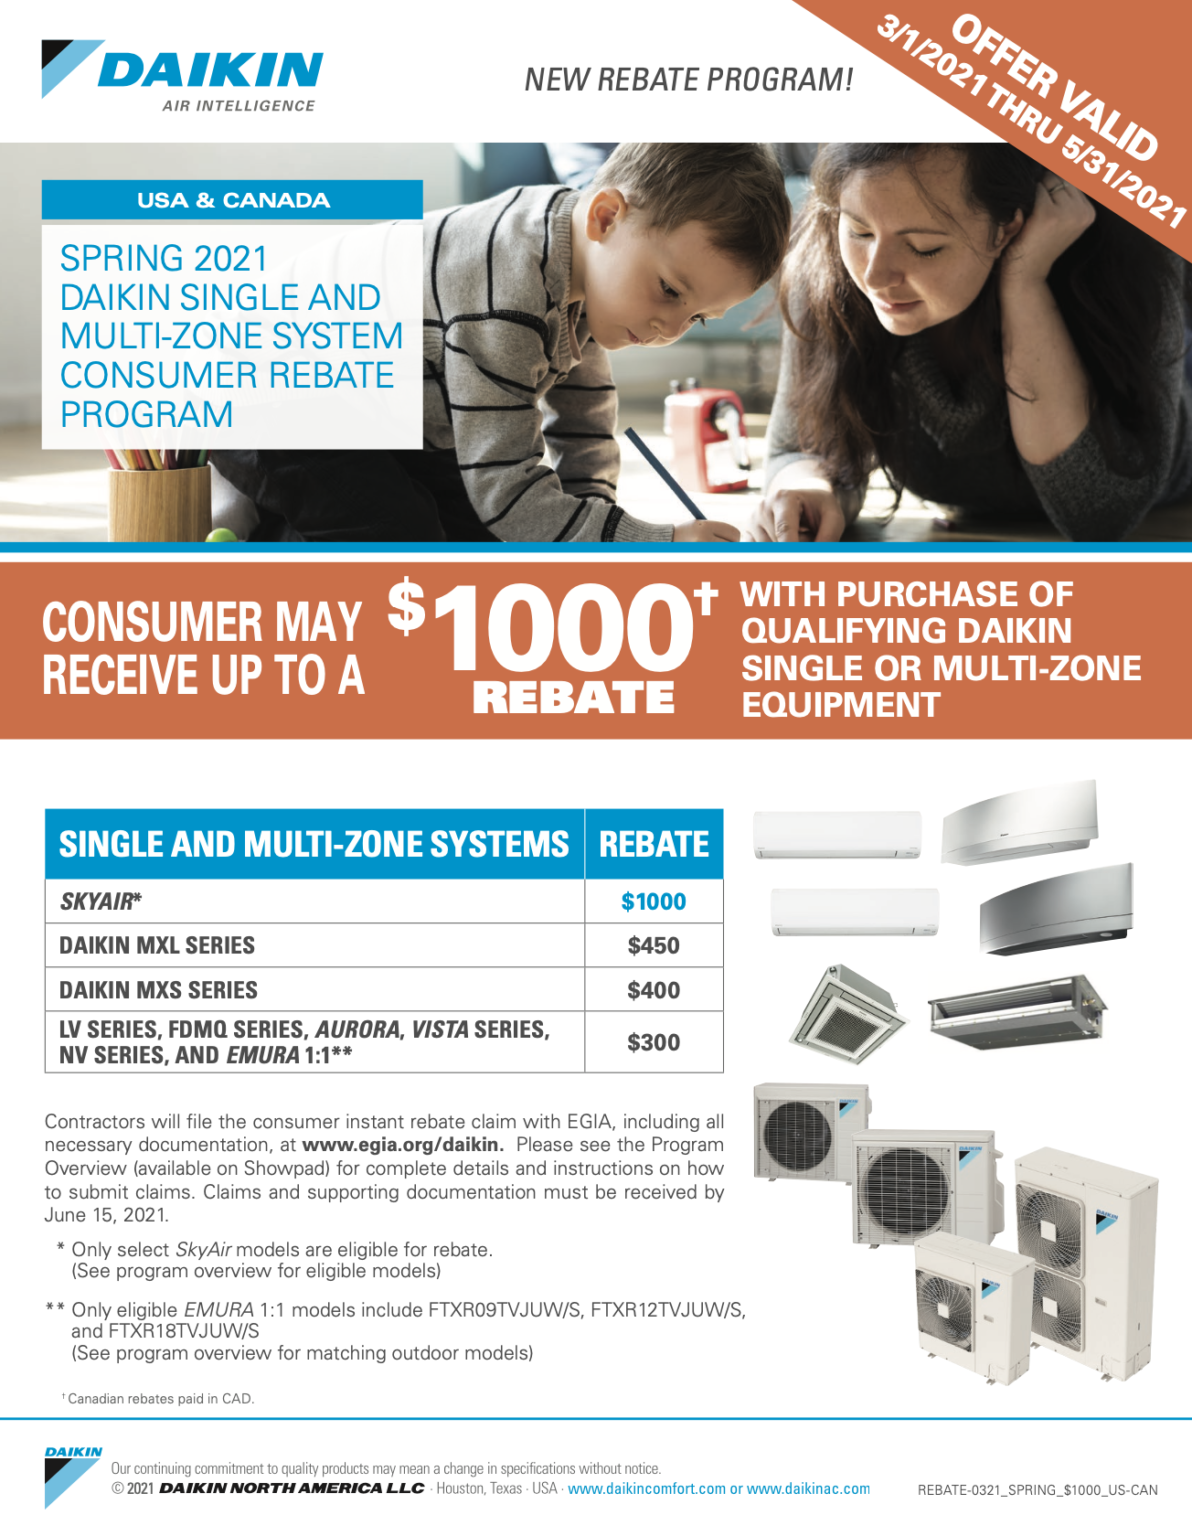 daikin-fit-high-efficiency-heat-pumps-100-financing-rebates-available